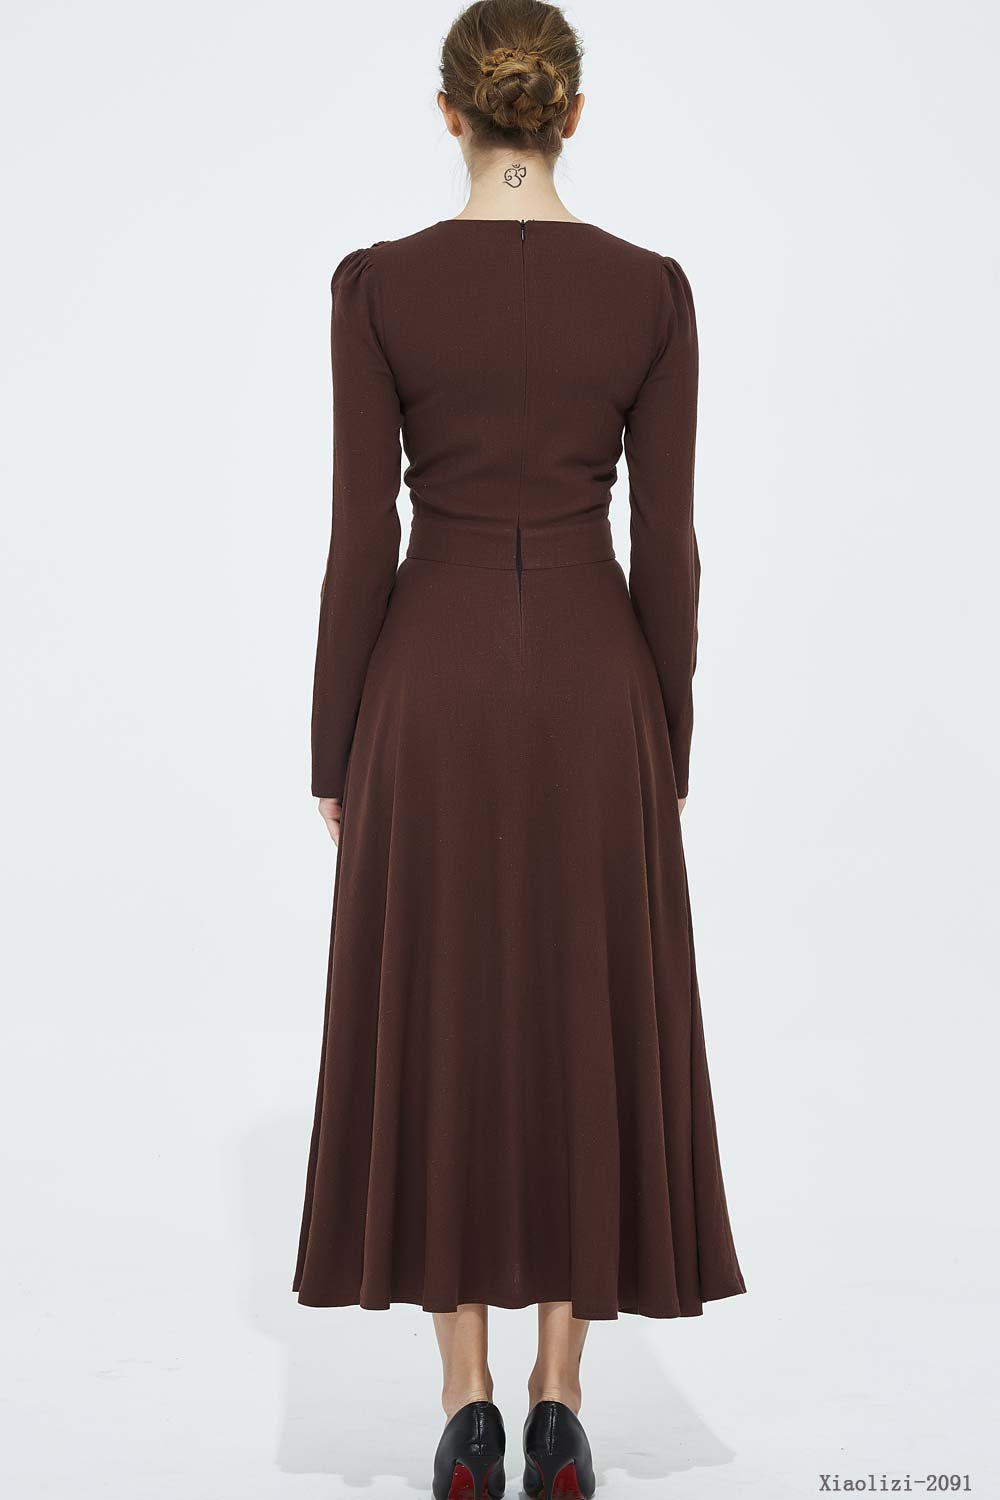 Long sleeve button front swing dress 2091#